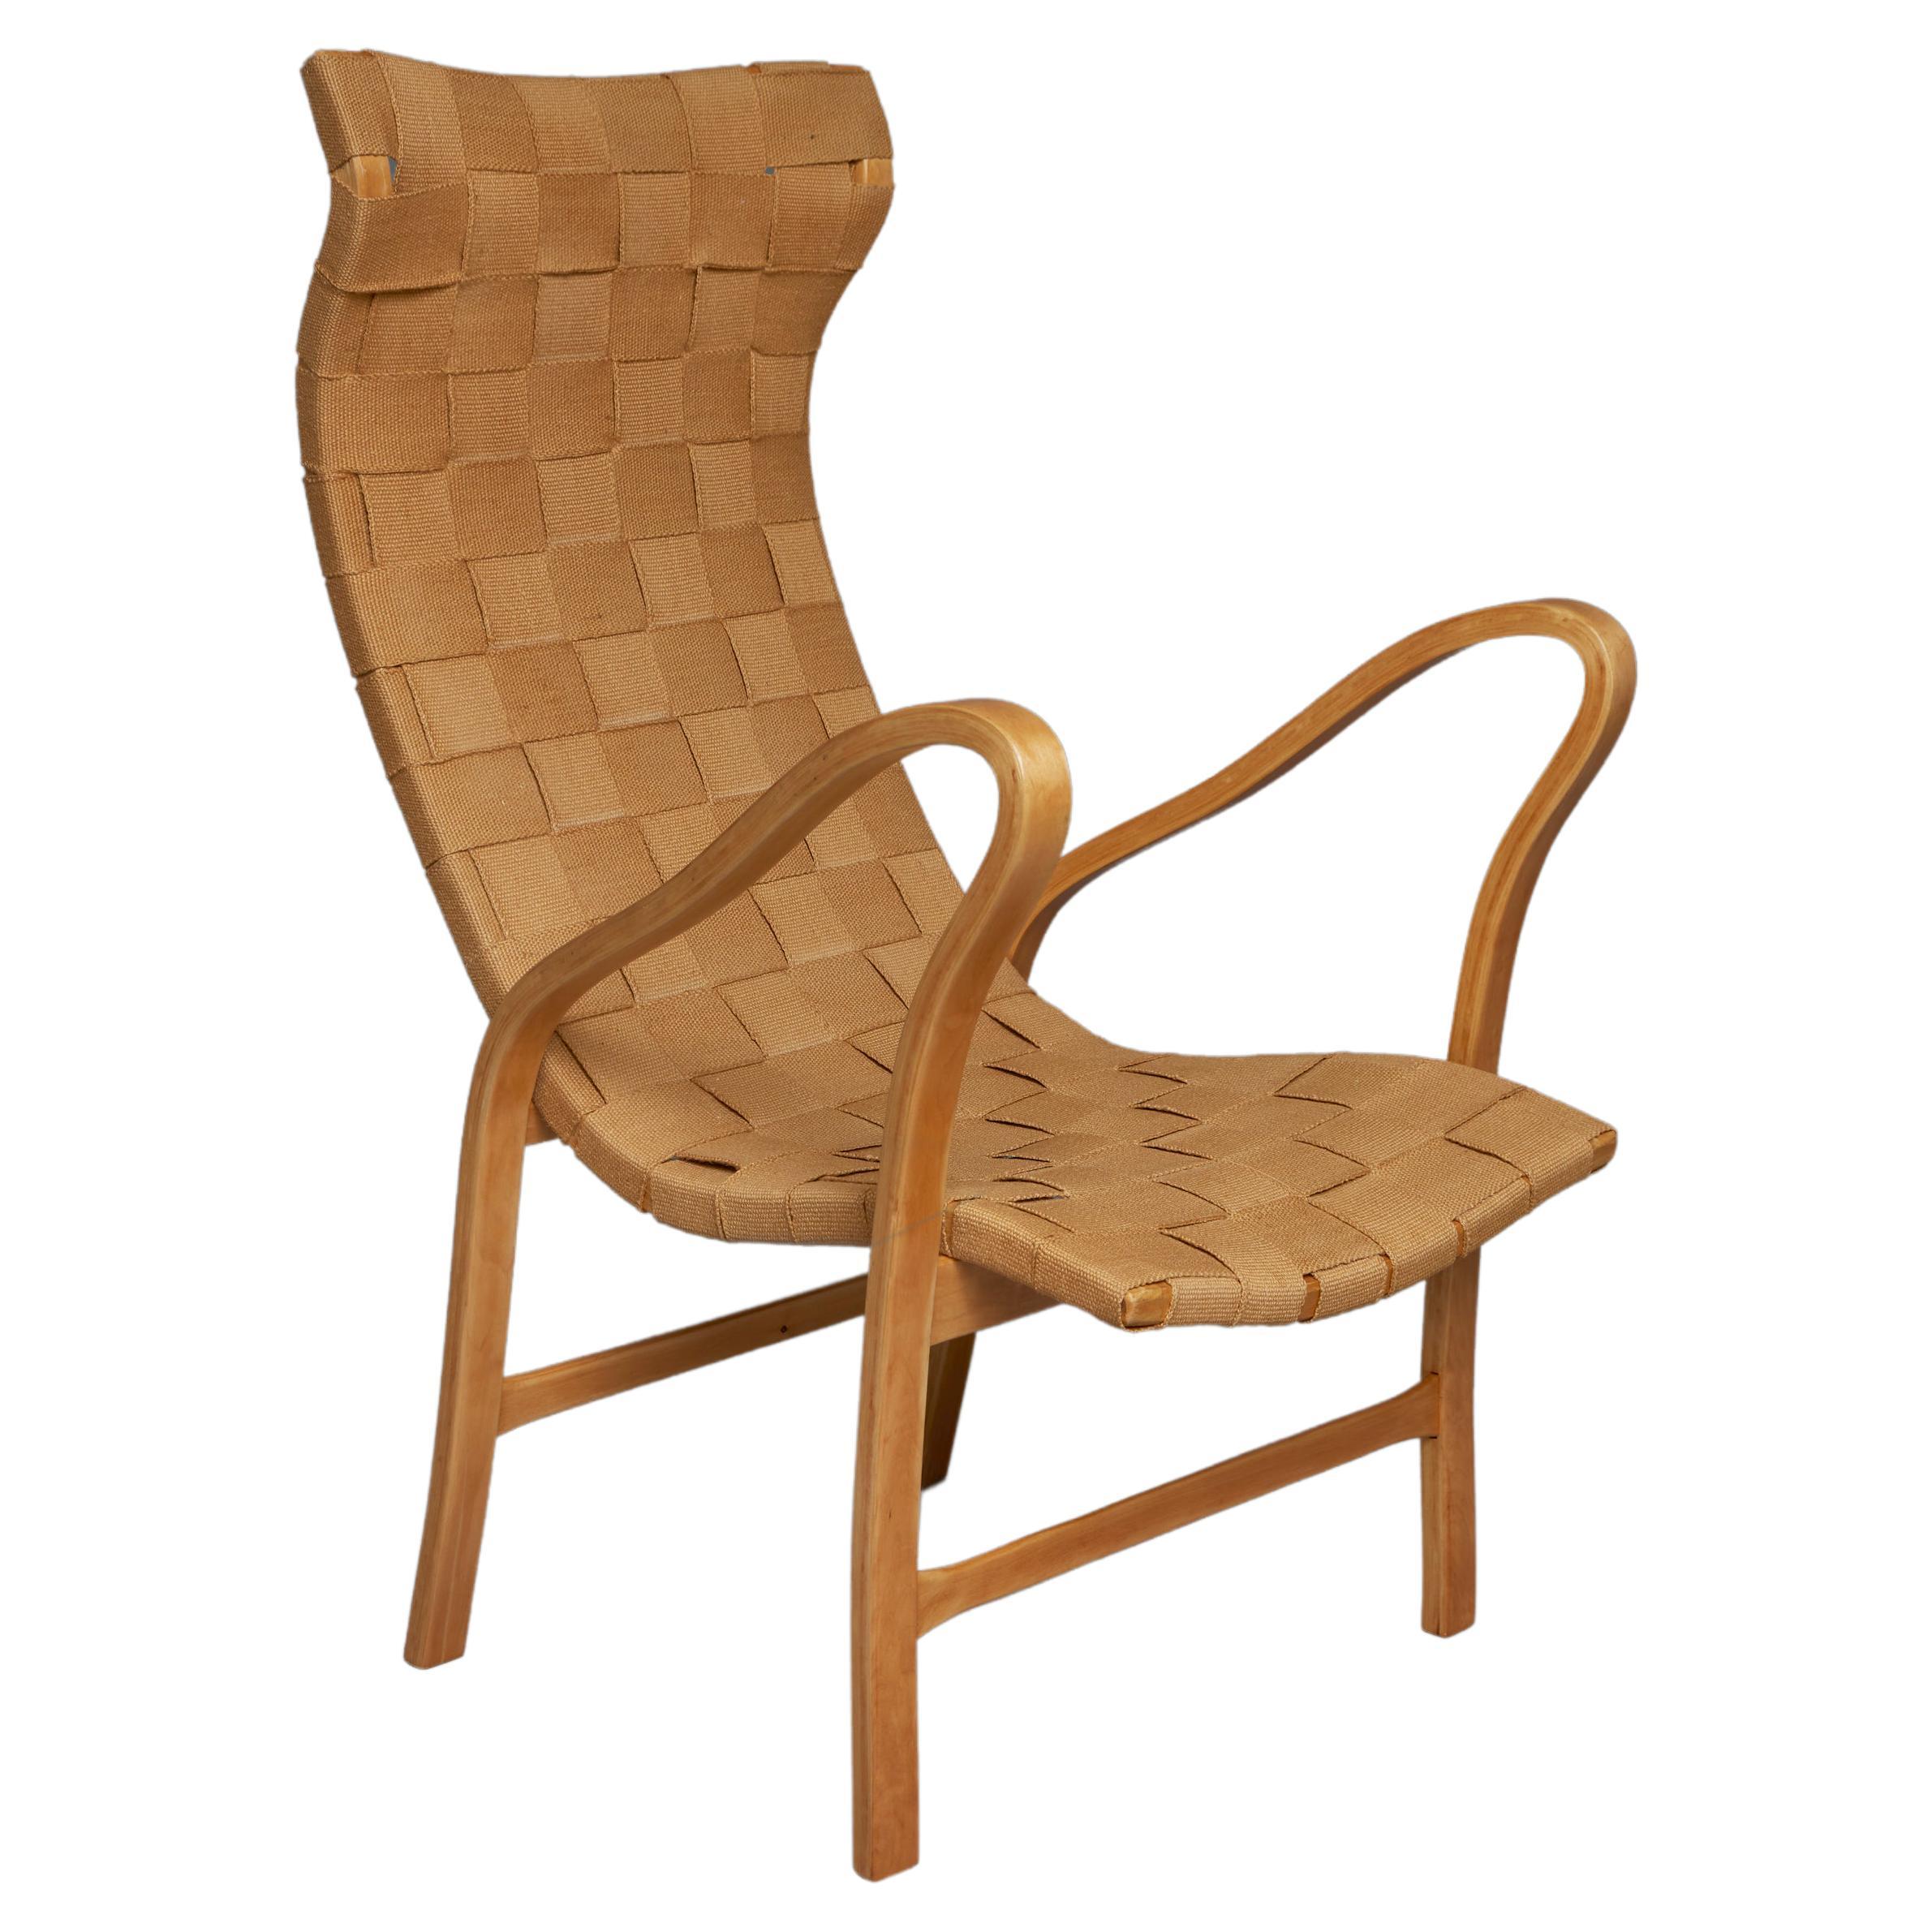 1940's Gustaf Axel Berg ''Torparen'' Chair in Birch Plywood and Hemp